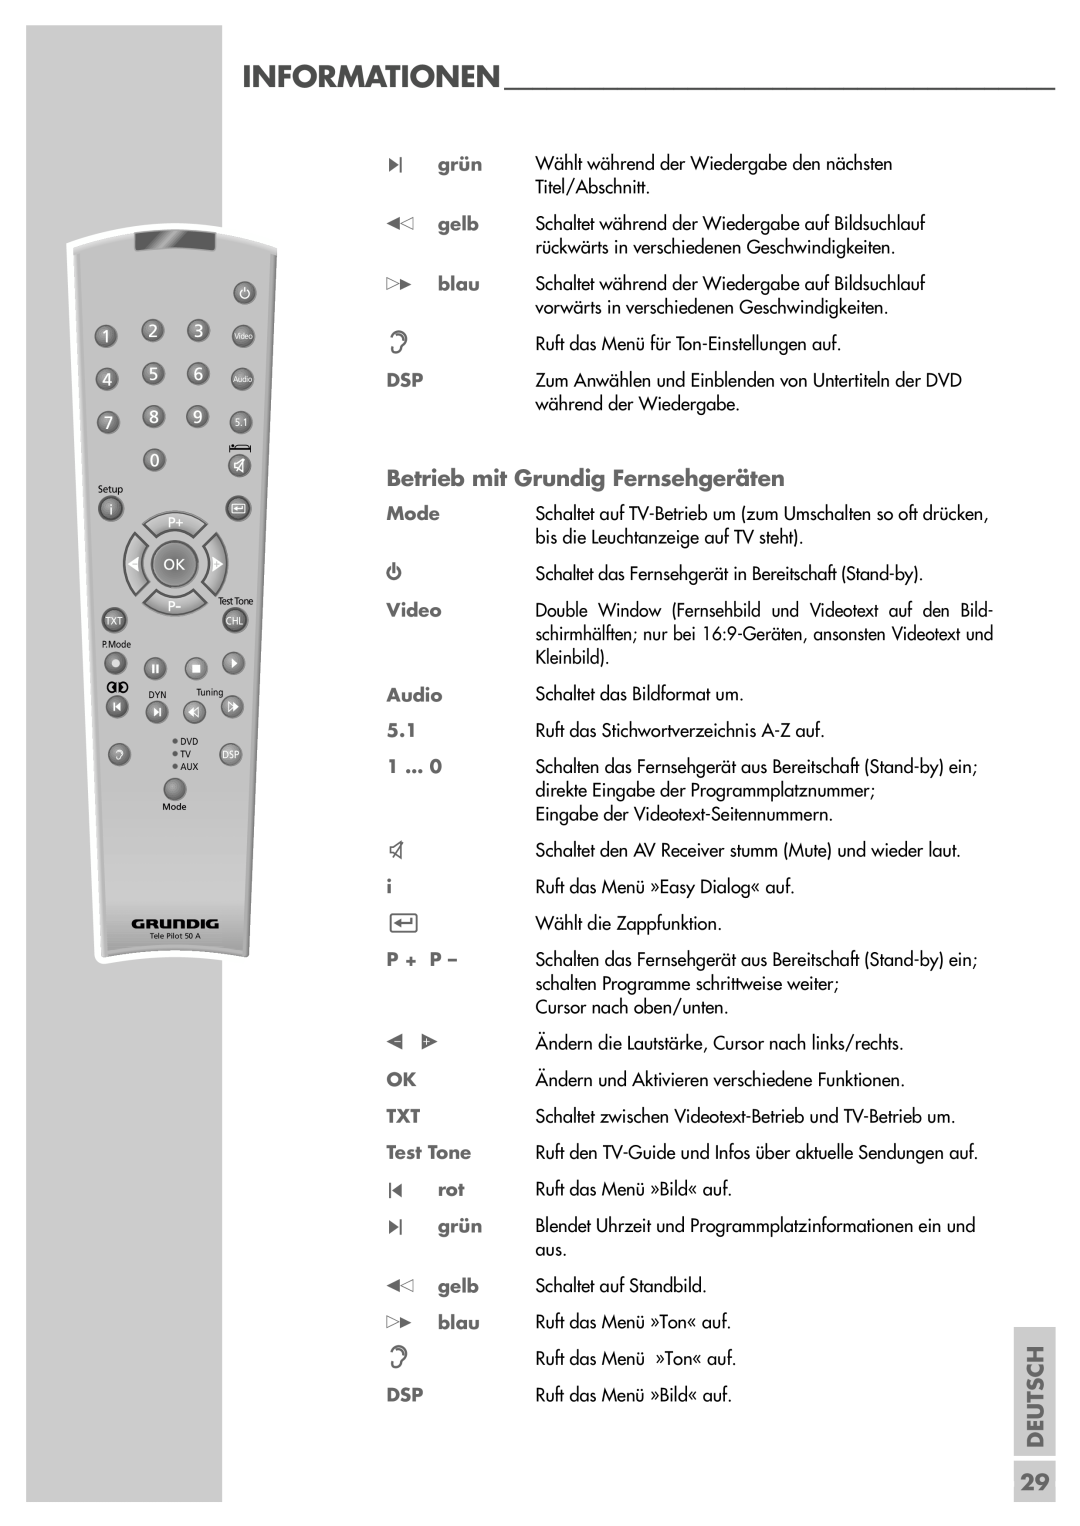 Grundig AVR 5200 DD manual Betrieb mit Grundig Fernsehgeräten 